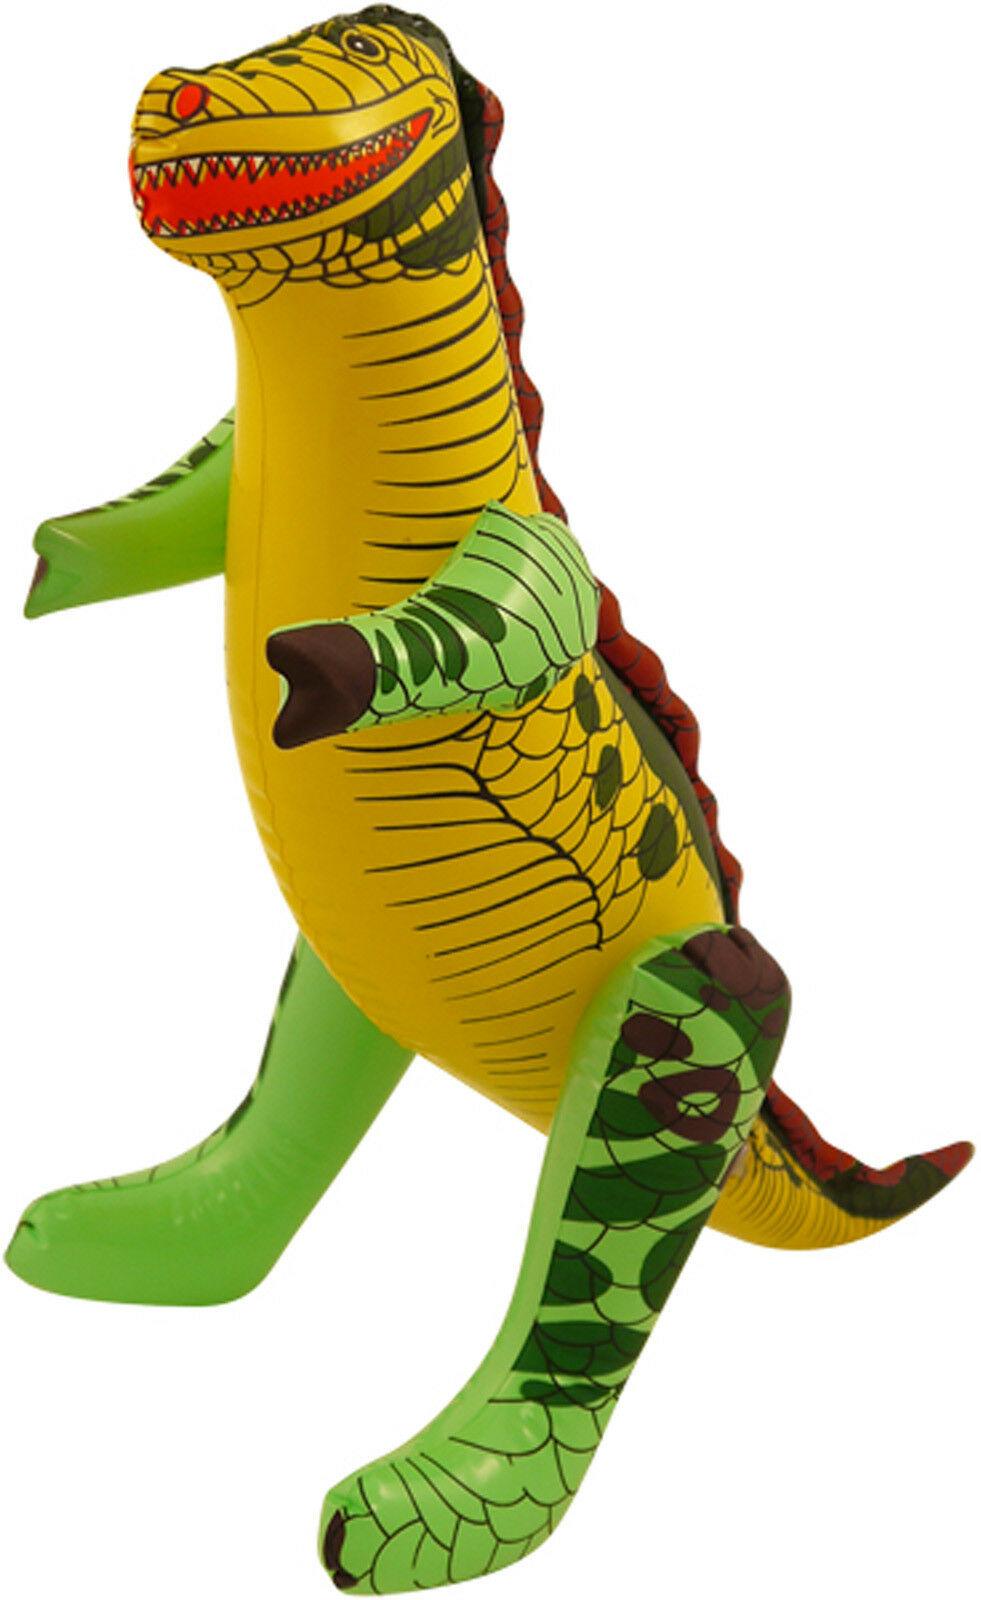 Inflatable Blow up Godzilla Jurrasic Park Dinosaur Toy Party Prop Decoration - Labreeze